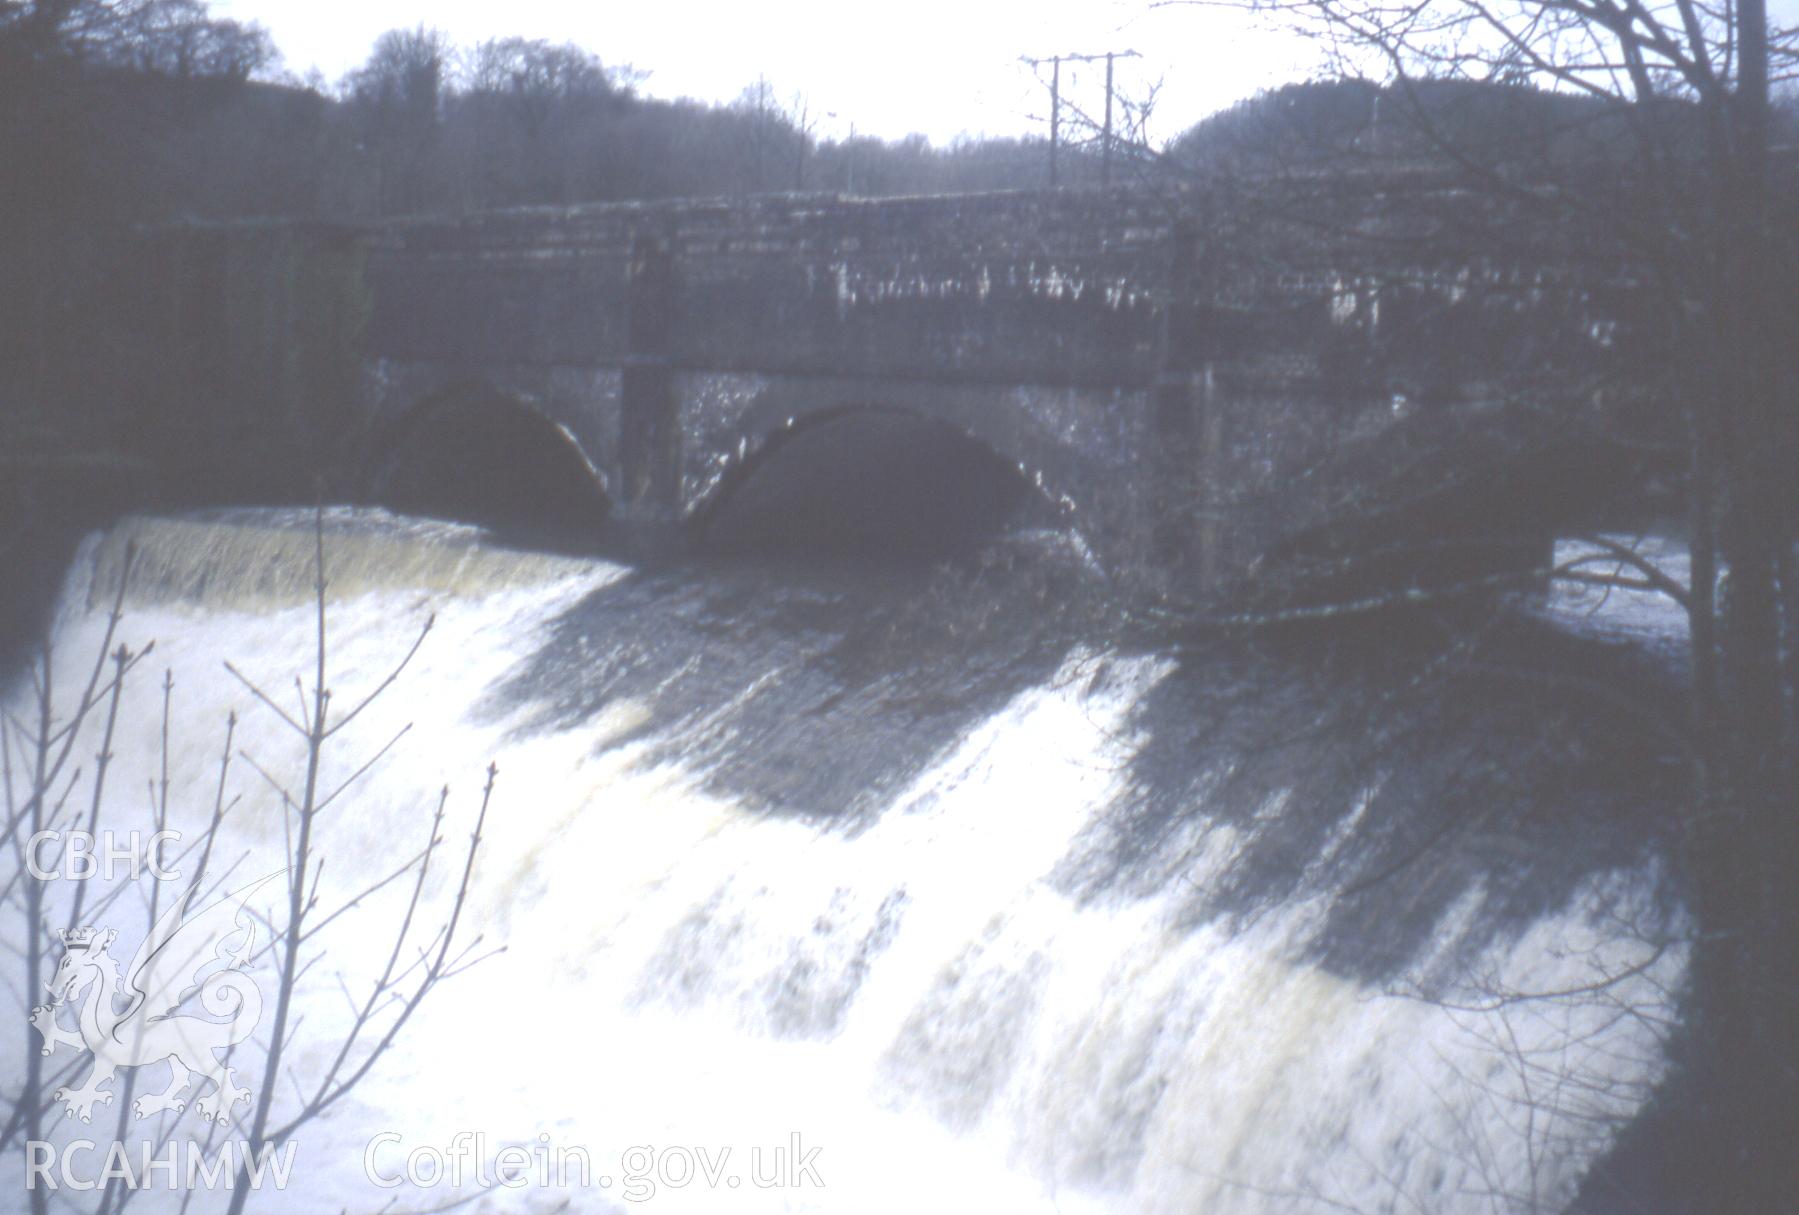 Weir or downstream south-west elevation after heavy rain.